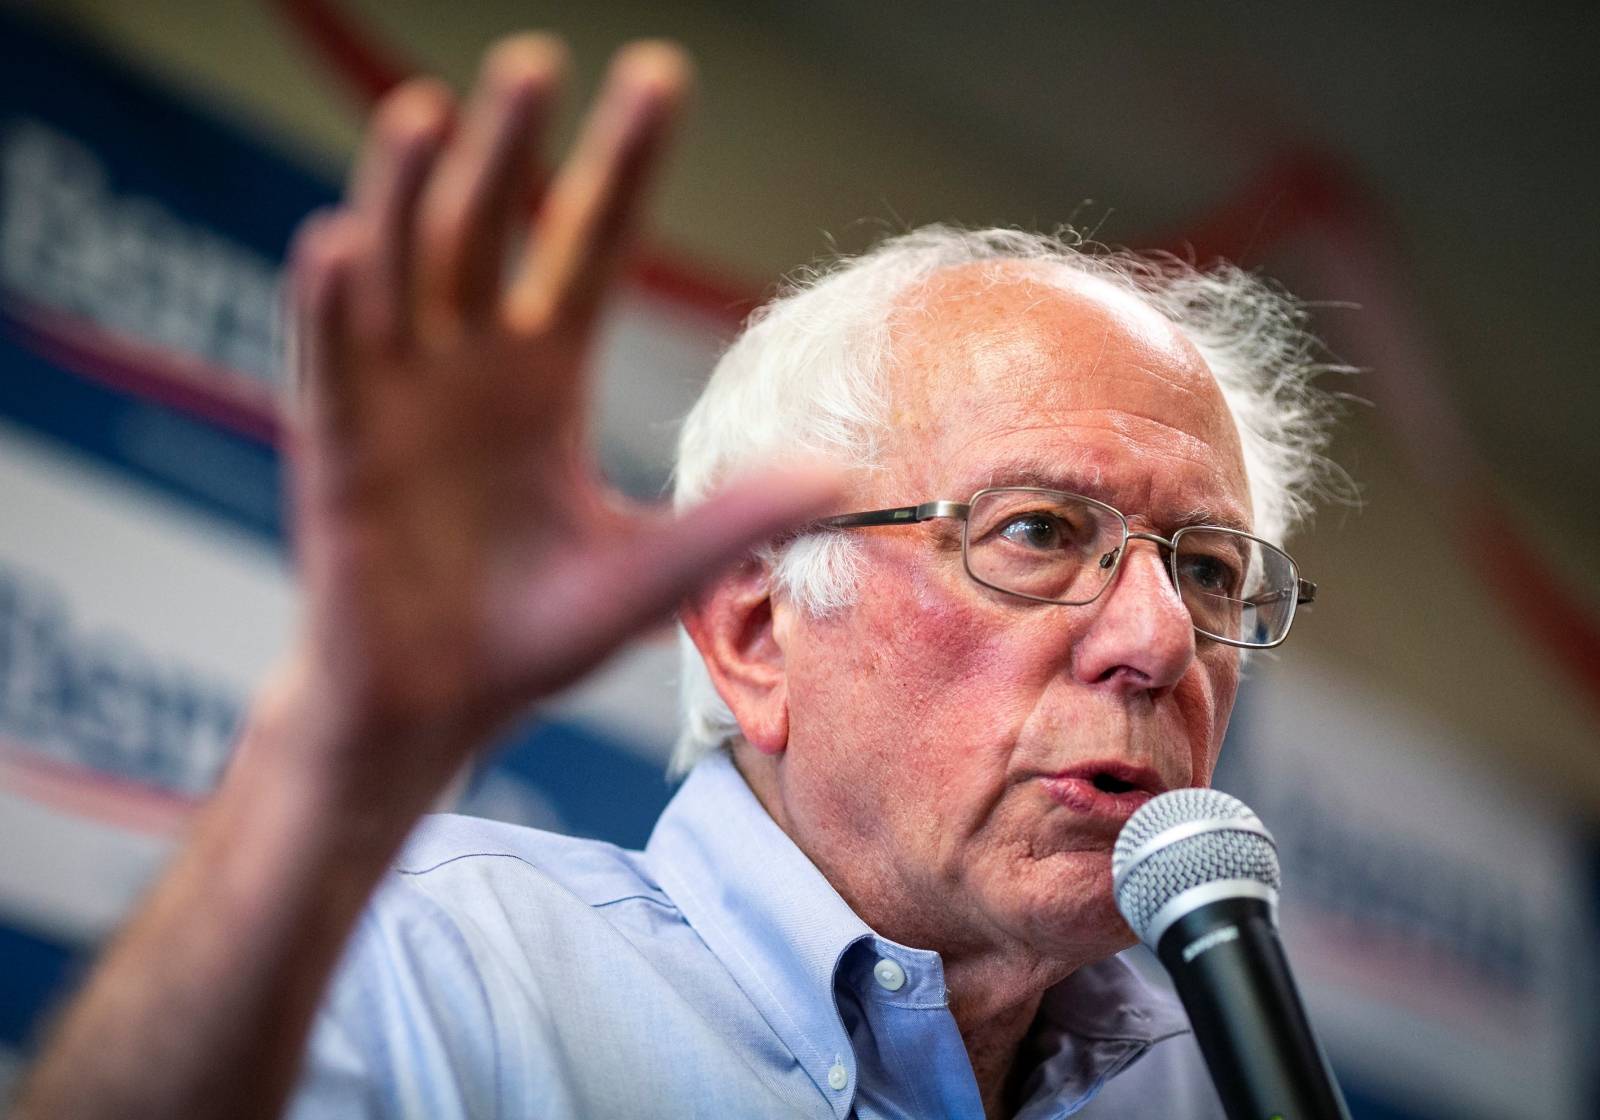 Democartic presidential candidate Sanders campaigns in Iowa